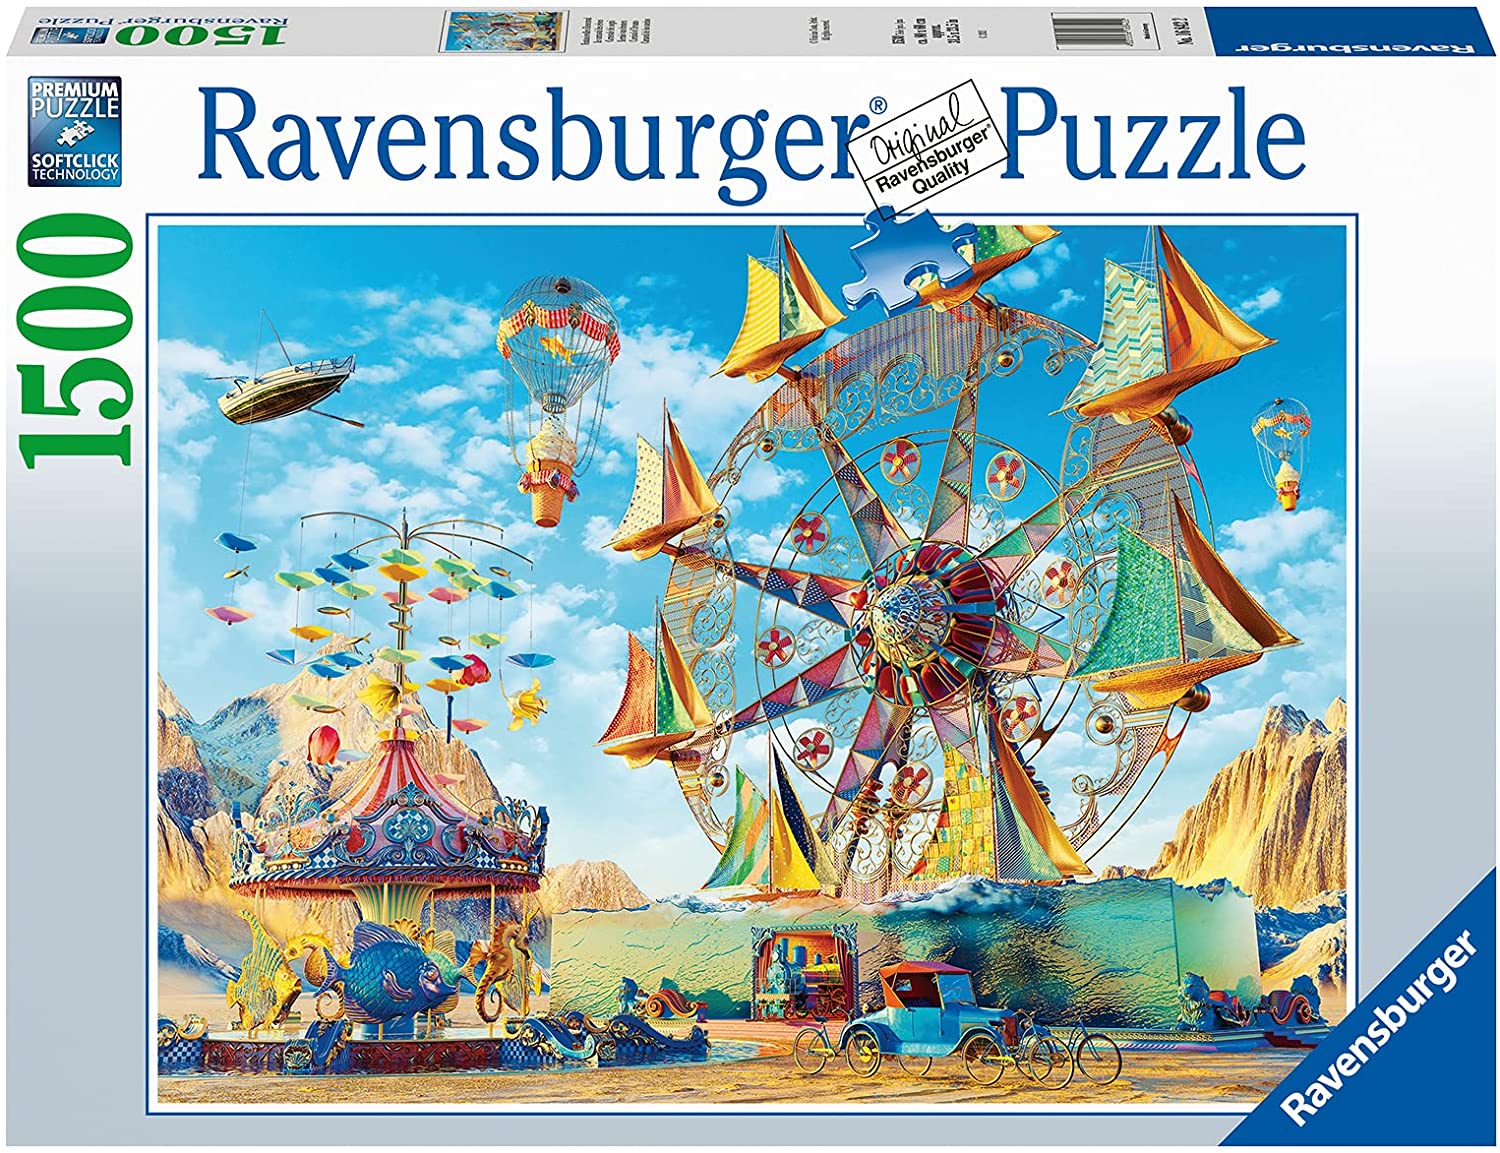 Ravensburger Waterfall Jigsaw Puzzle (2000 Piece)